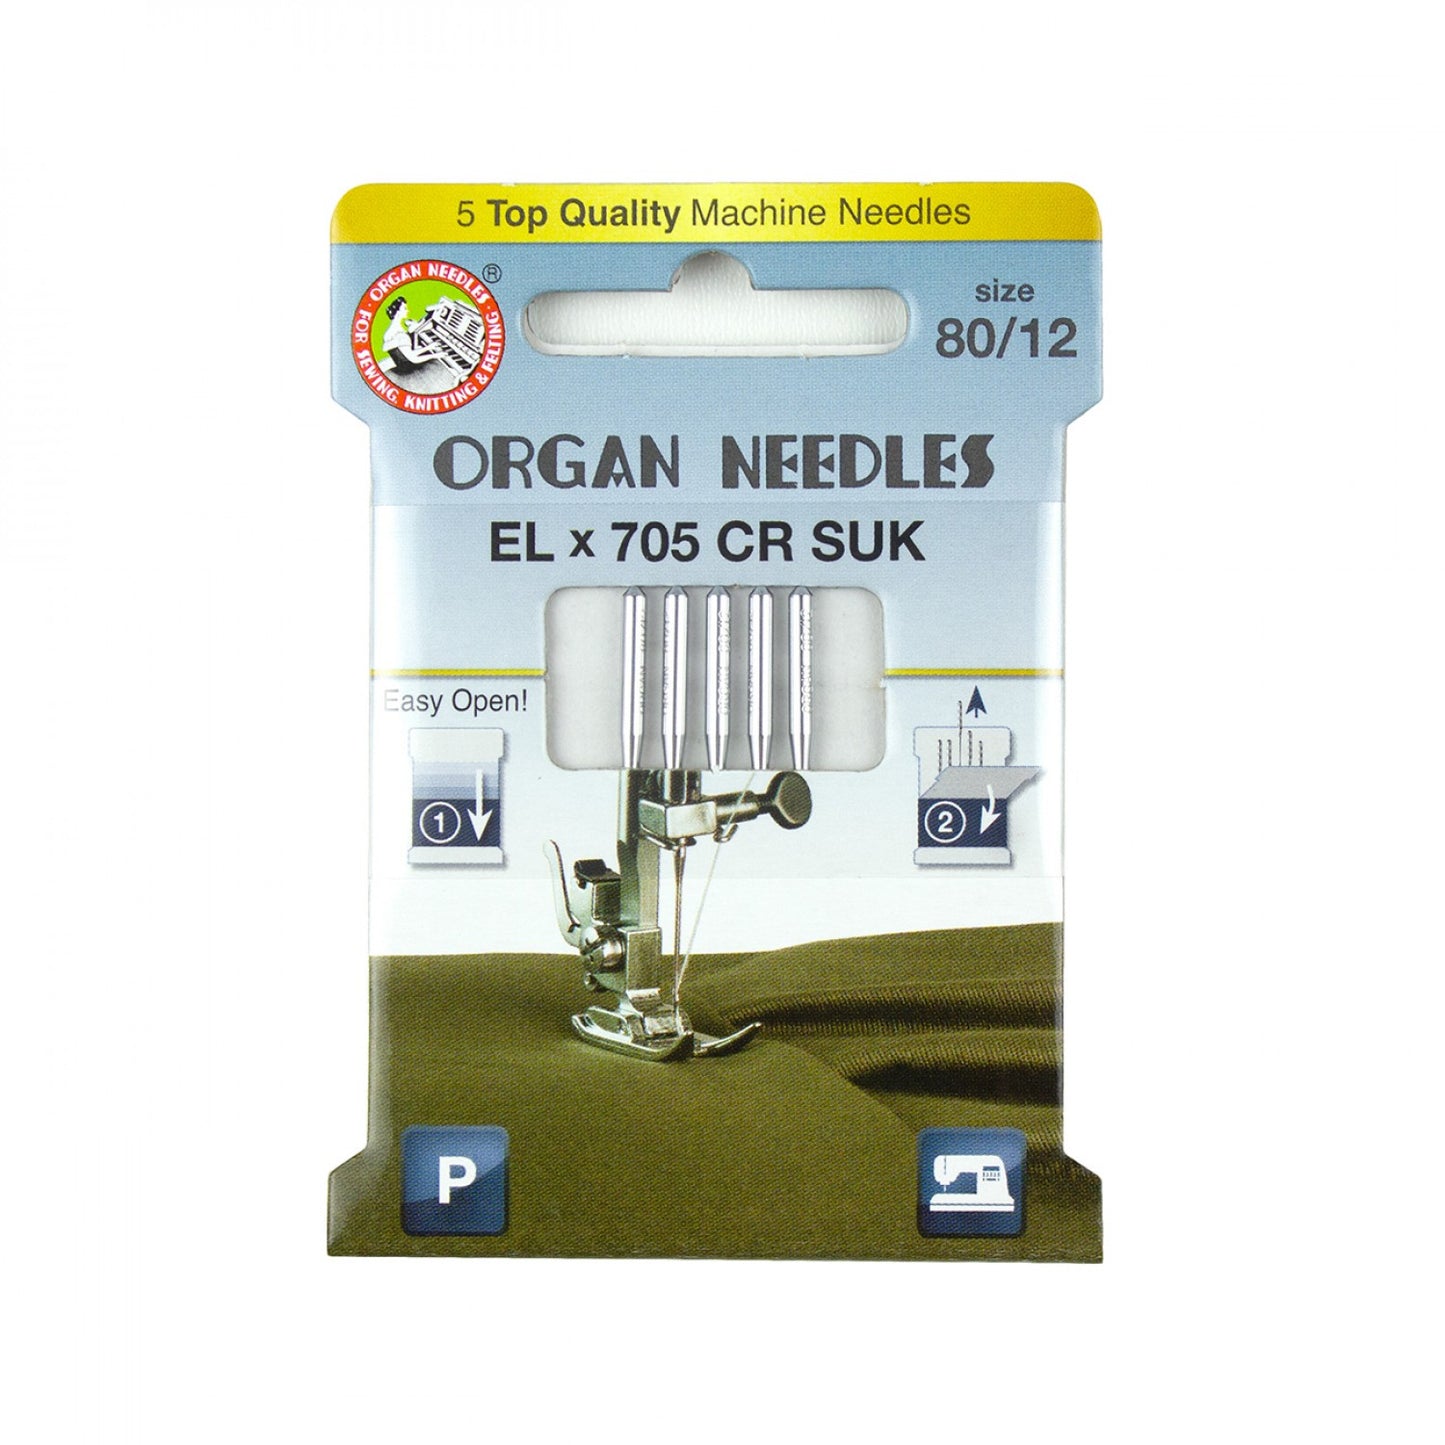 ORGAN Brand ELx705 Chromium SUK Size 80/12 - Serger Needles - 5 Pack